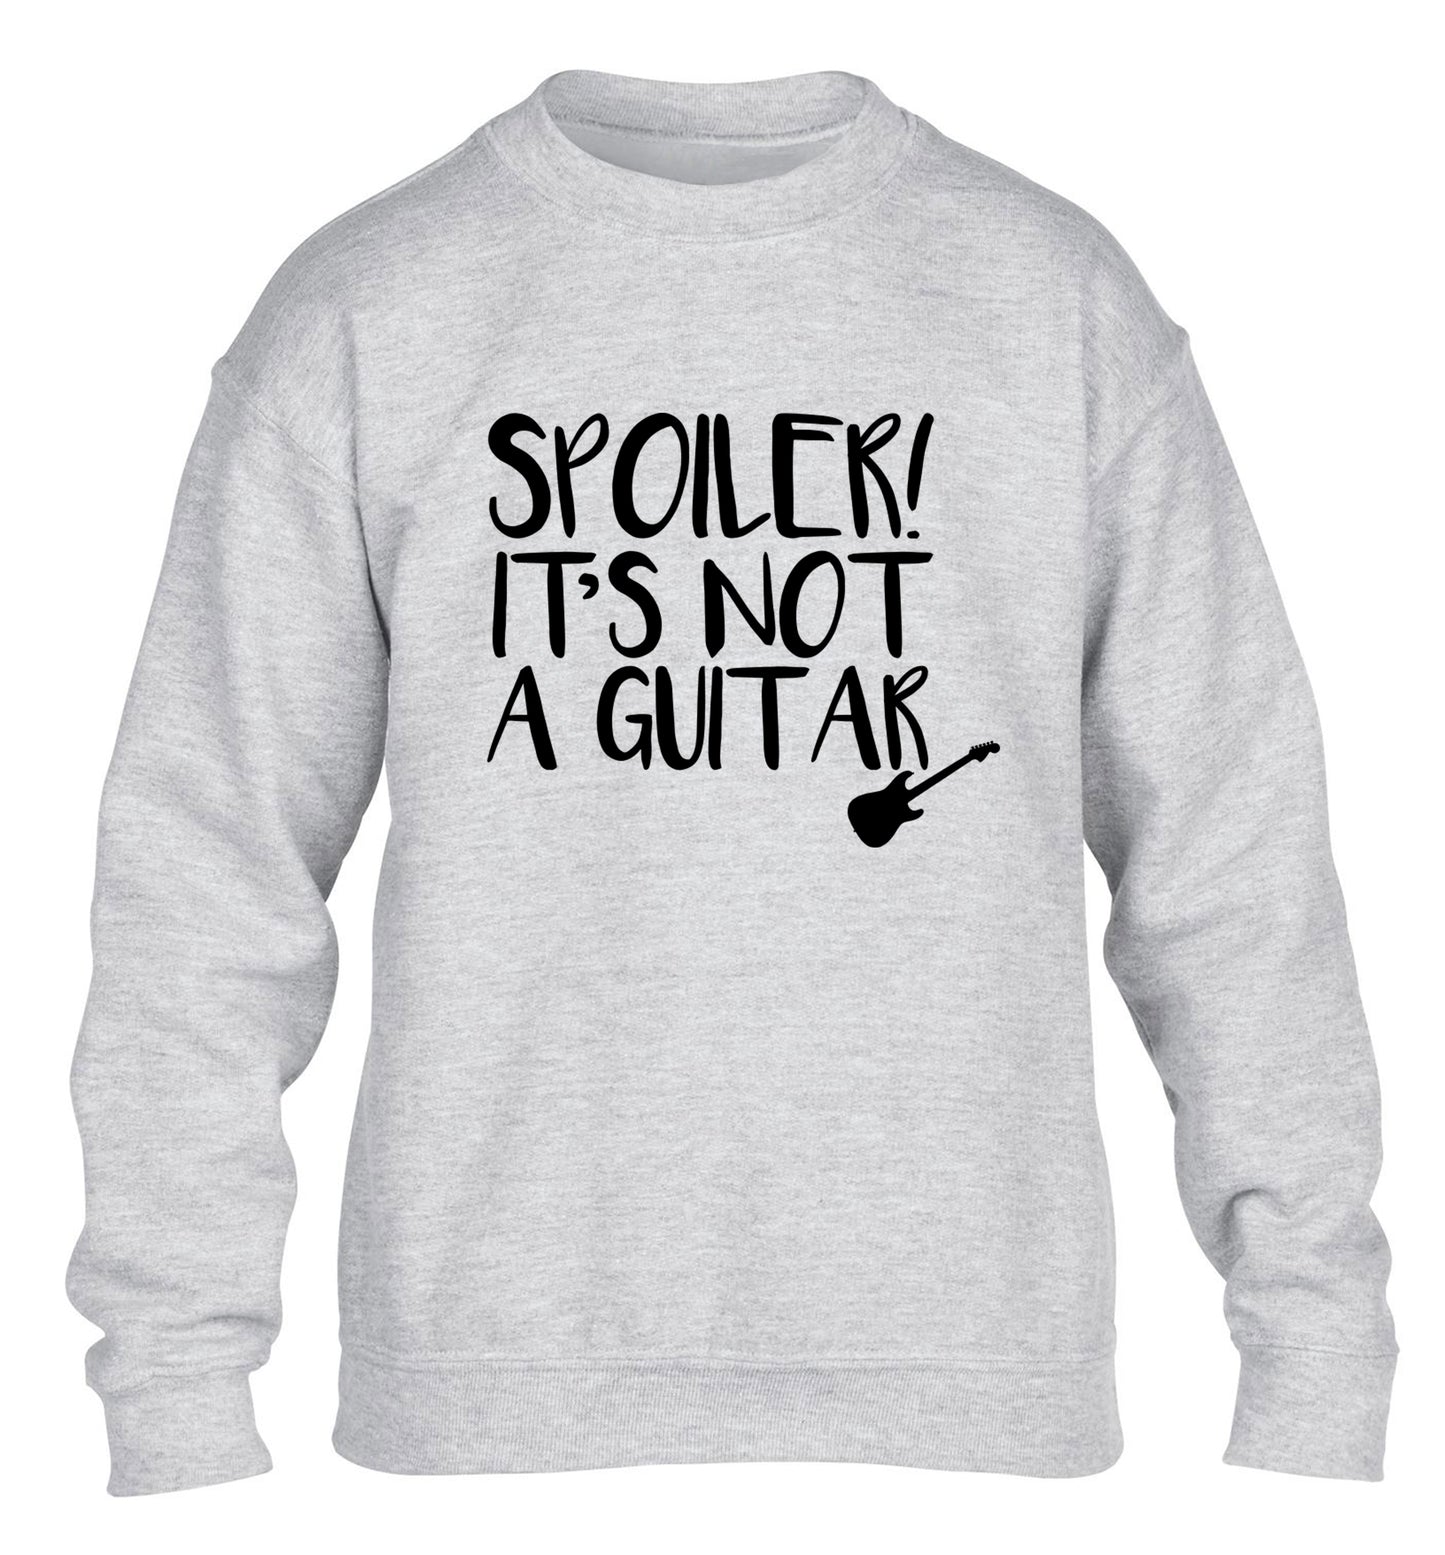 Spoiler it's not a guitar children's grey sweater 12-13 Years